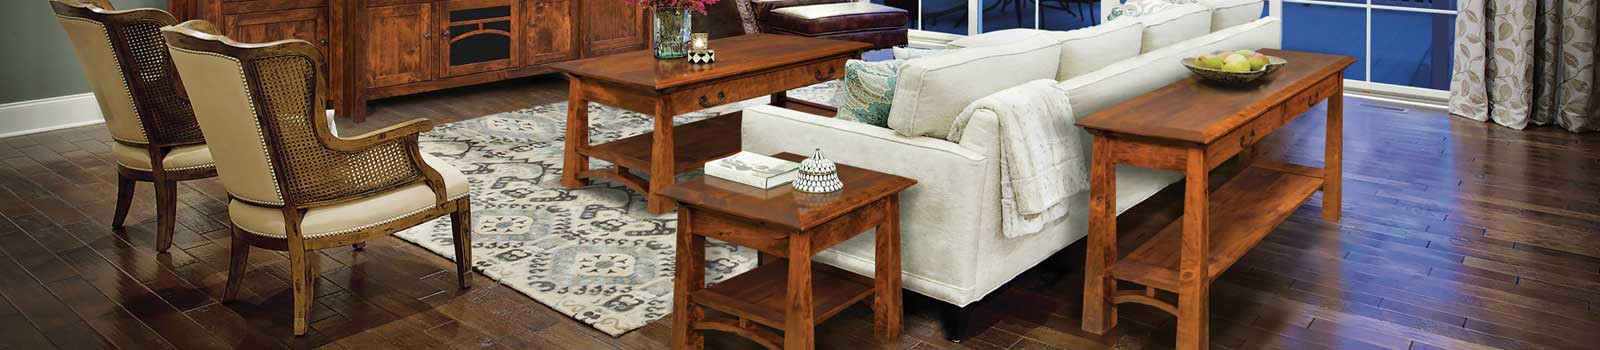 Cut-price amish living room furniture